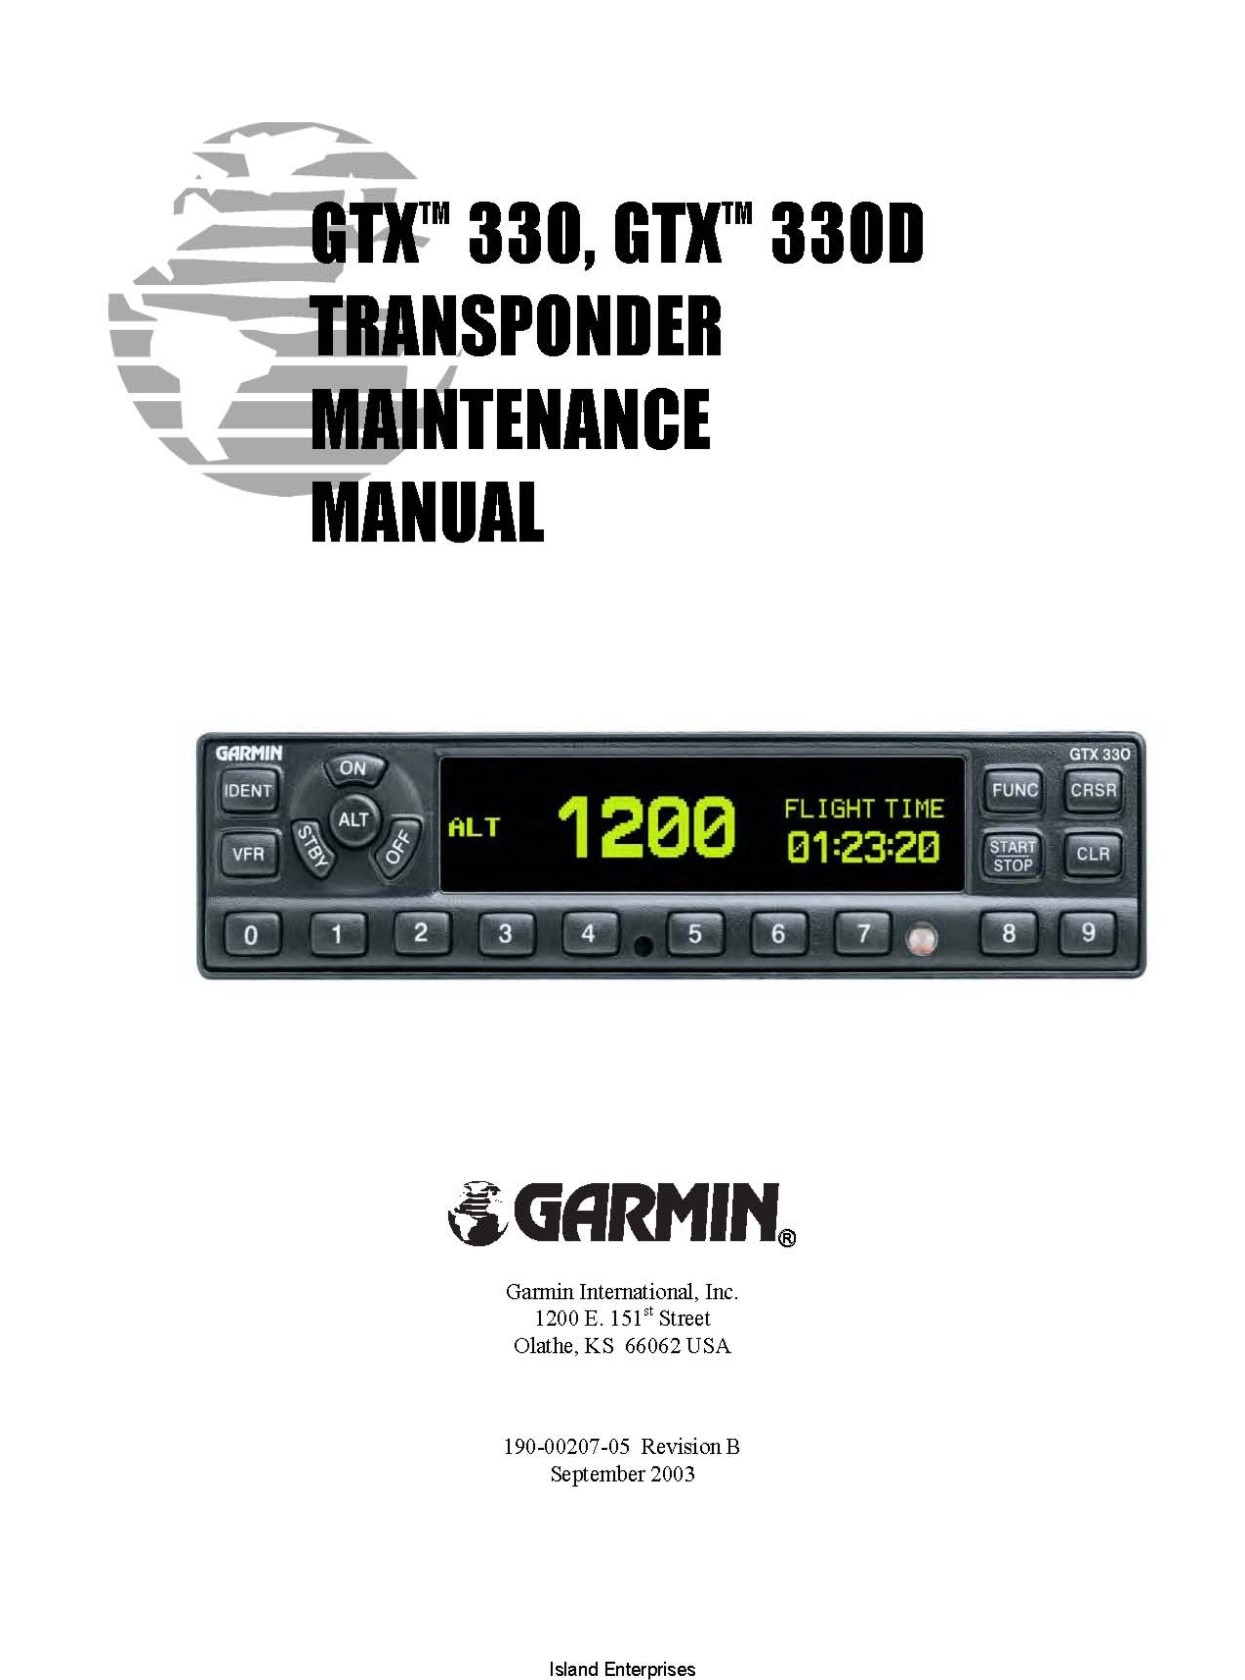 Garmin GTX GTX 330D Maintenance Manual 190-00207-05